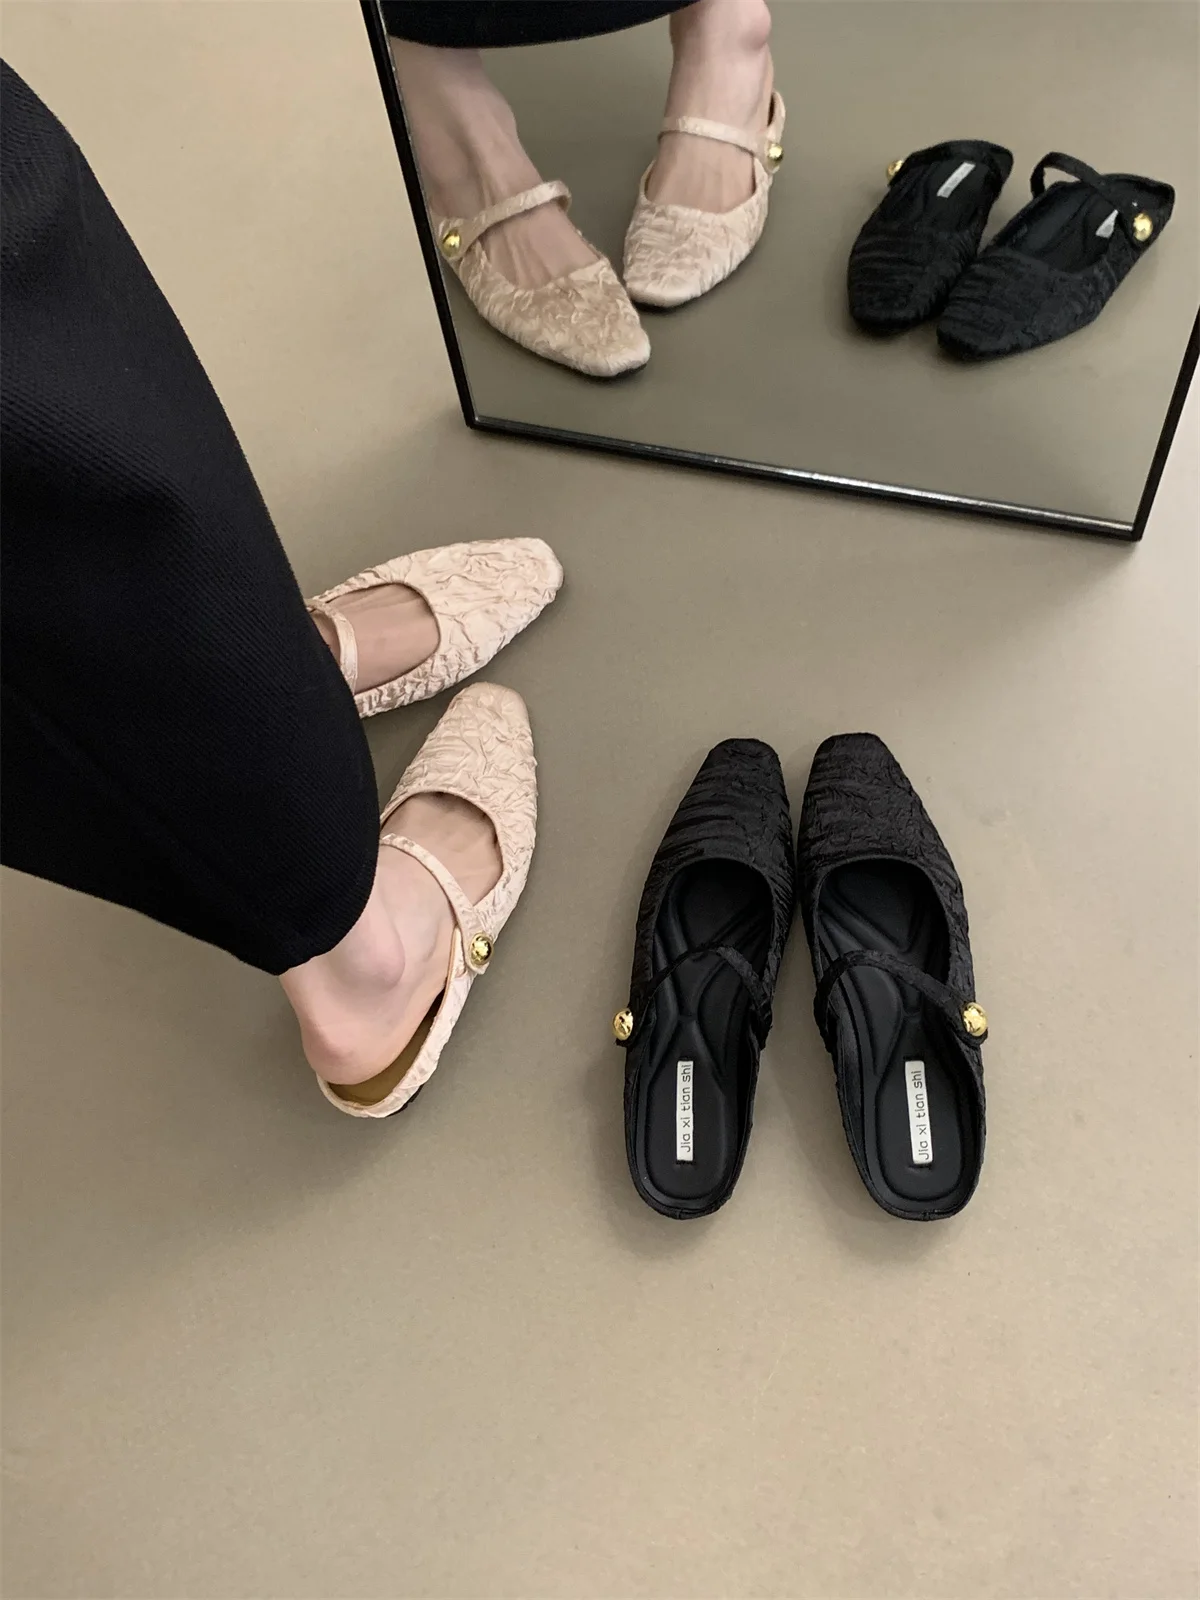 

Slingback Flats Shoes For Summer Walking Half Slipper Comfortable Sequin Mary Jane Sandals Closed Toe Travel Elegant Woman Sanda